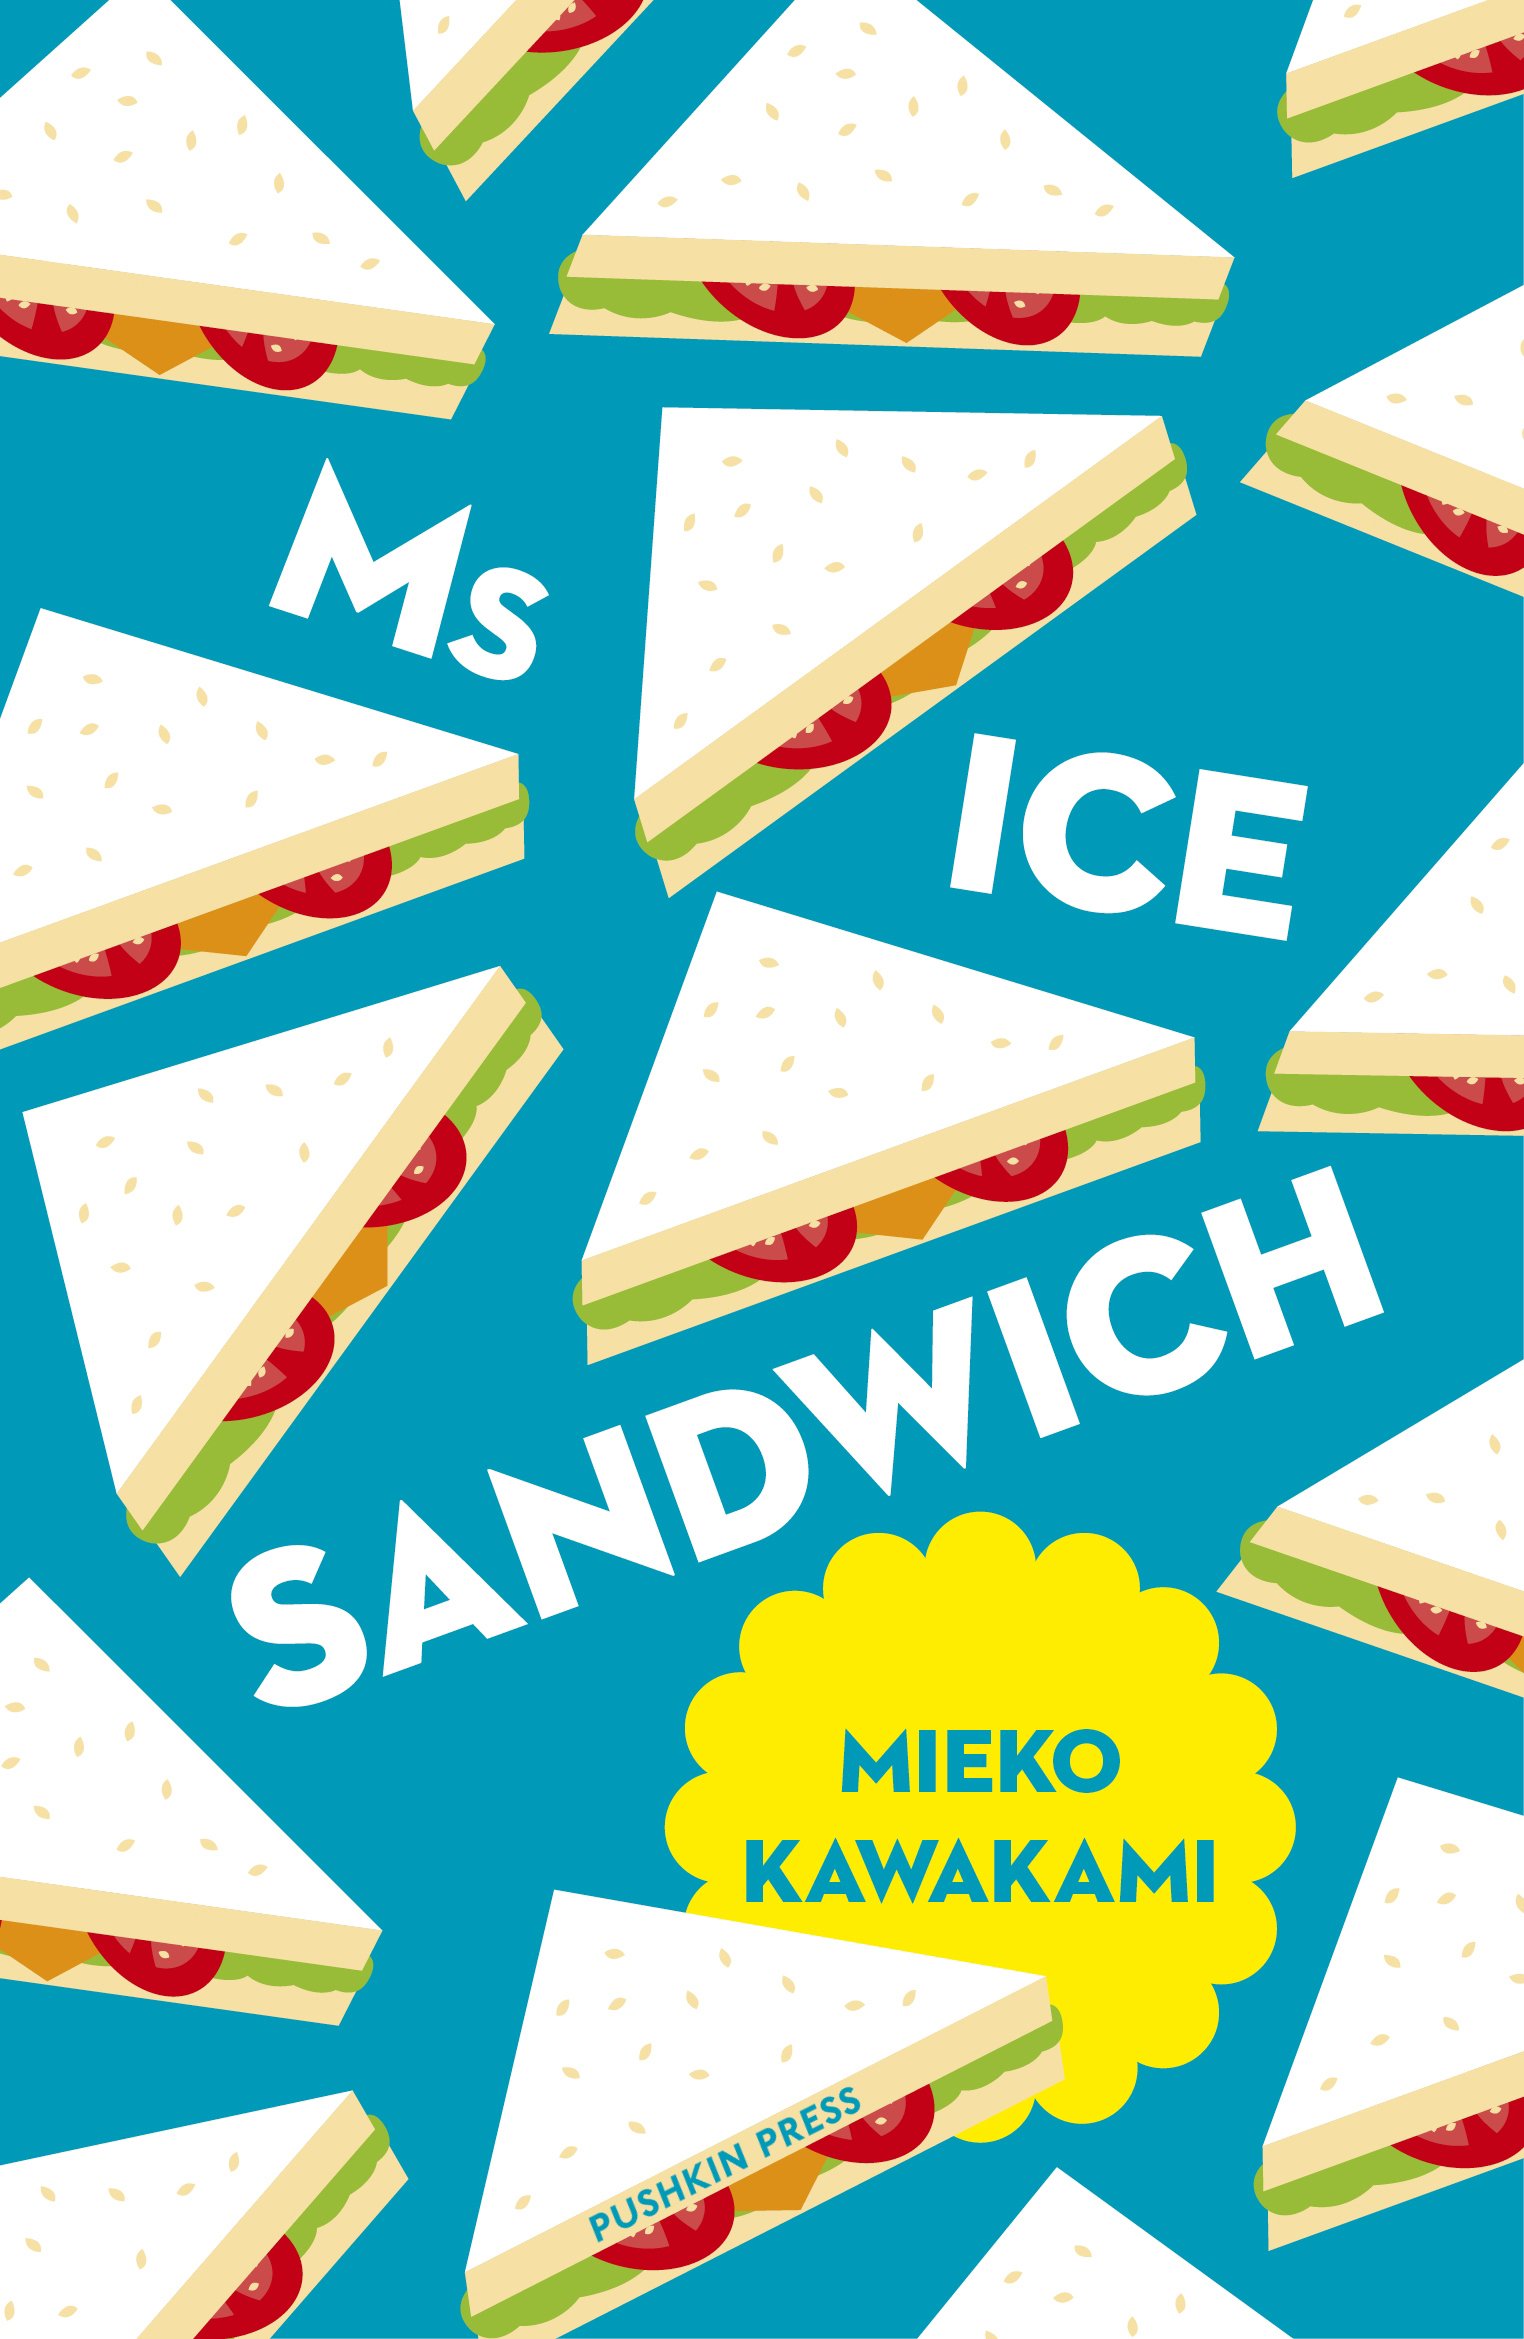 Mieko Kawakami: Ms Ice Sandwich (2017)